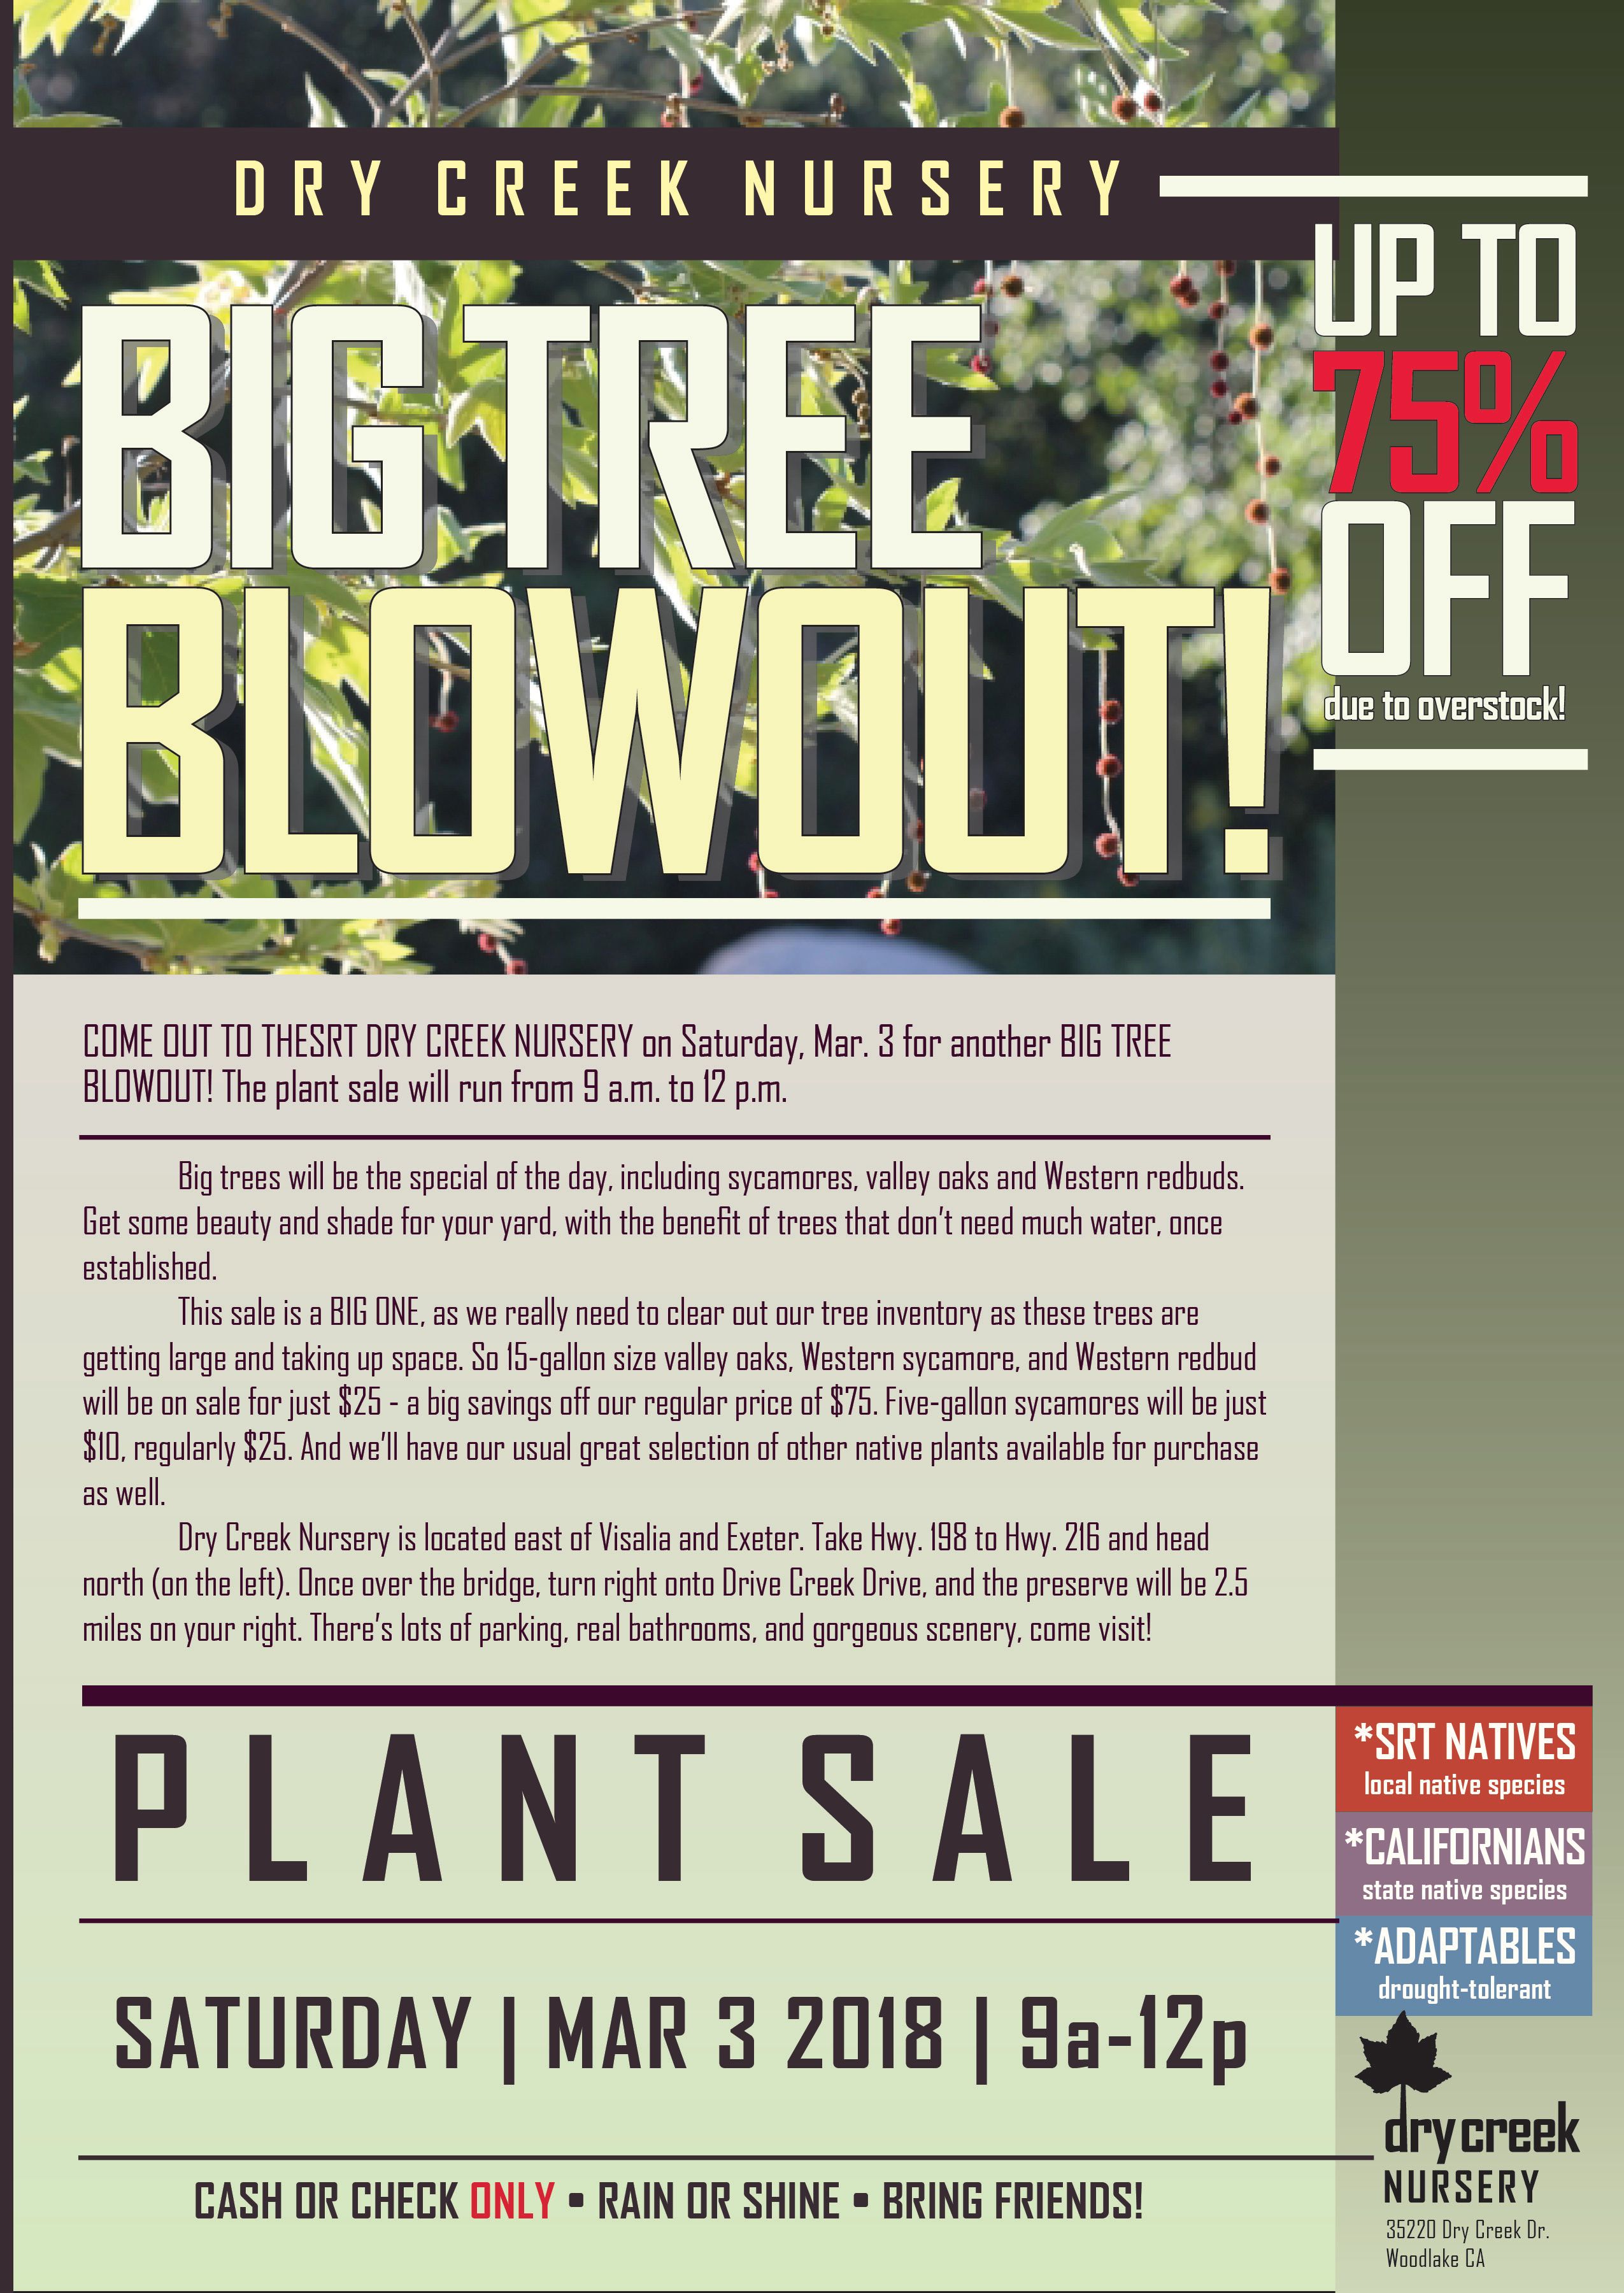 BIG TREE BLOWOUT returns to SRT Dry Creek Nursery Mar. 3